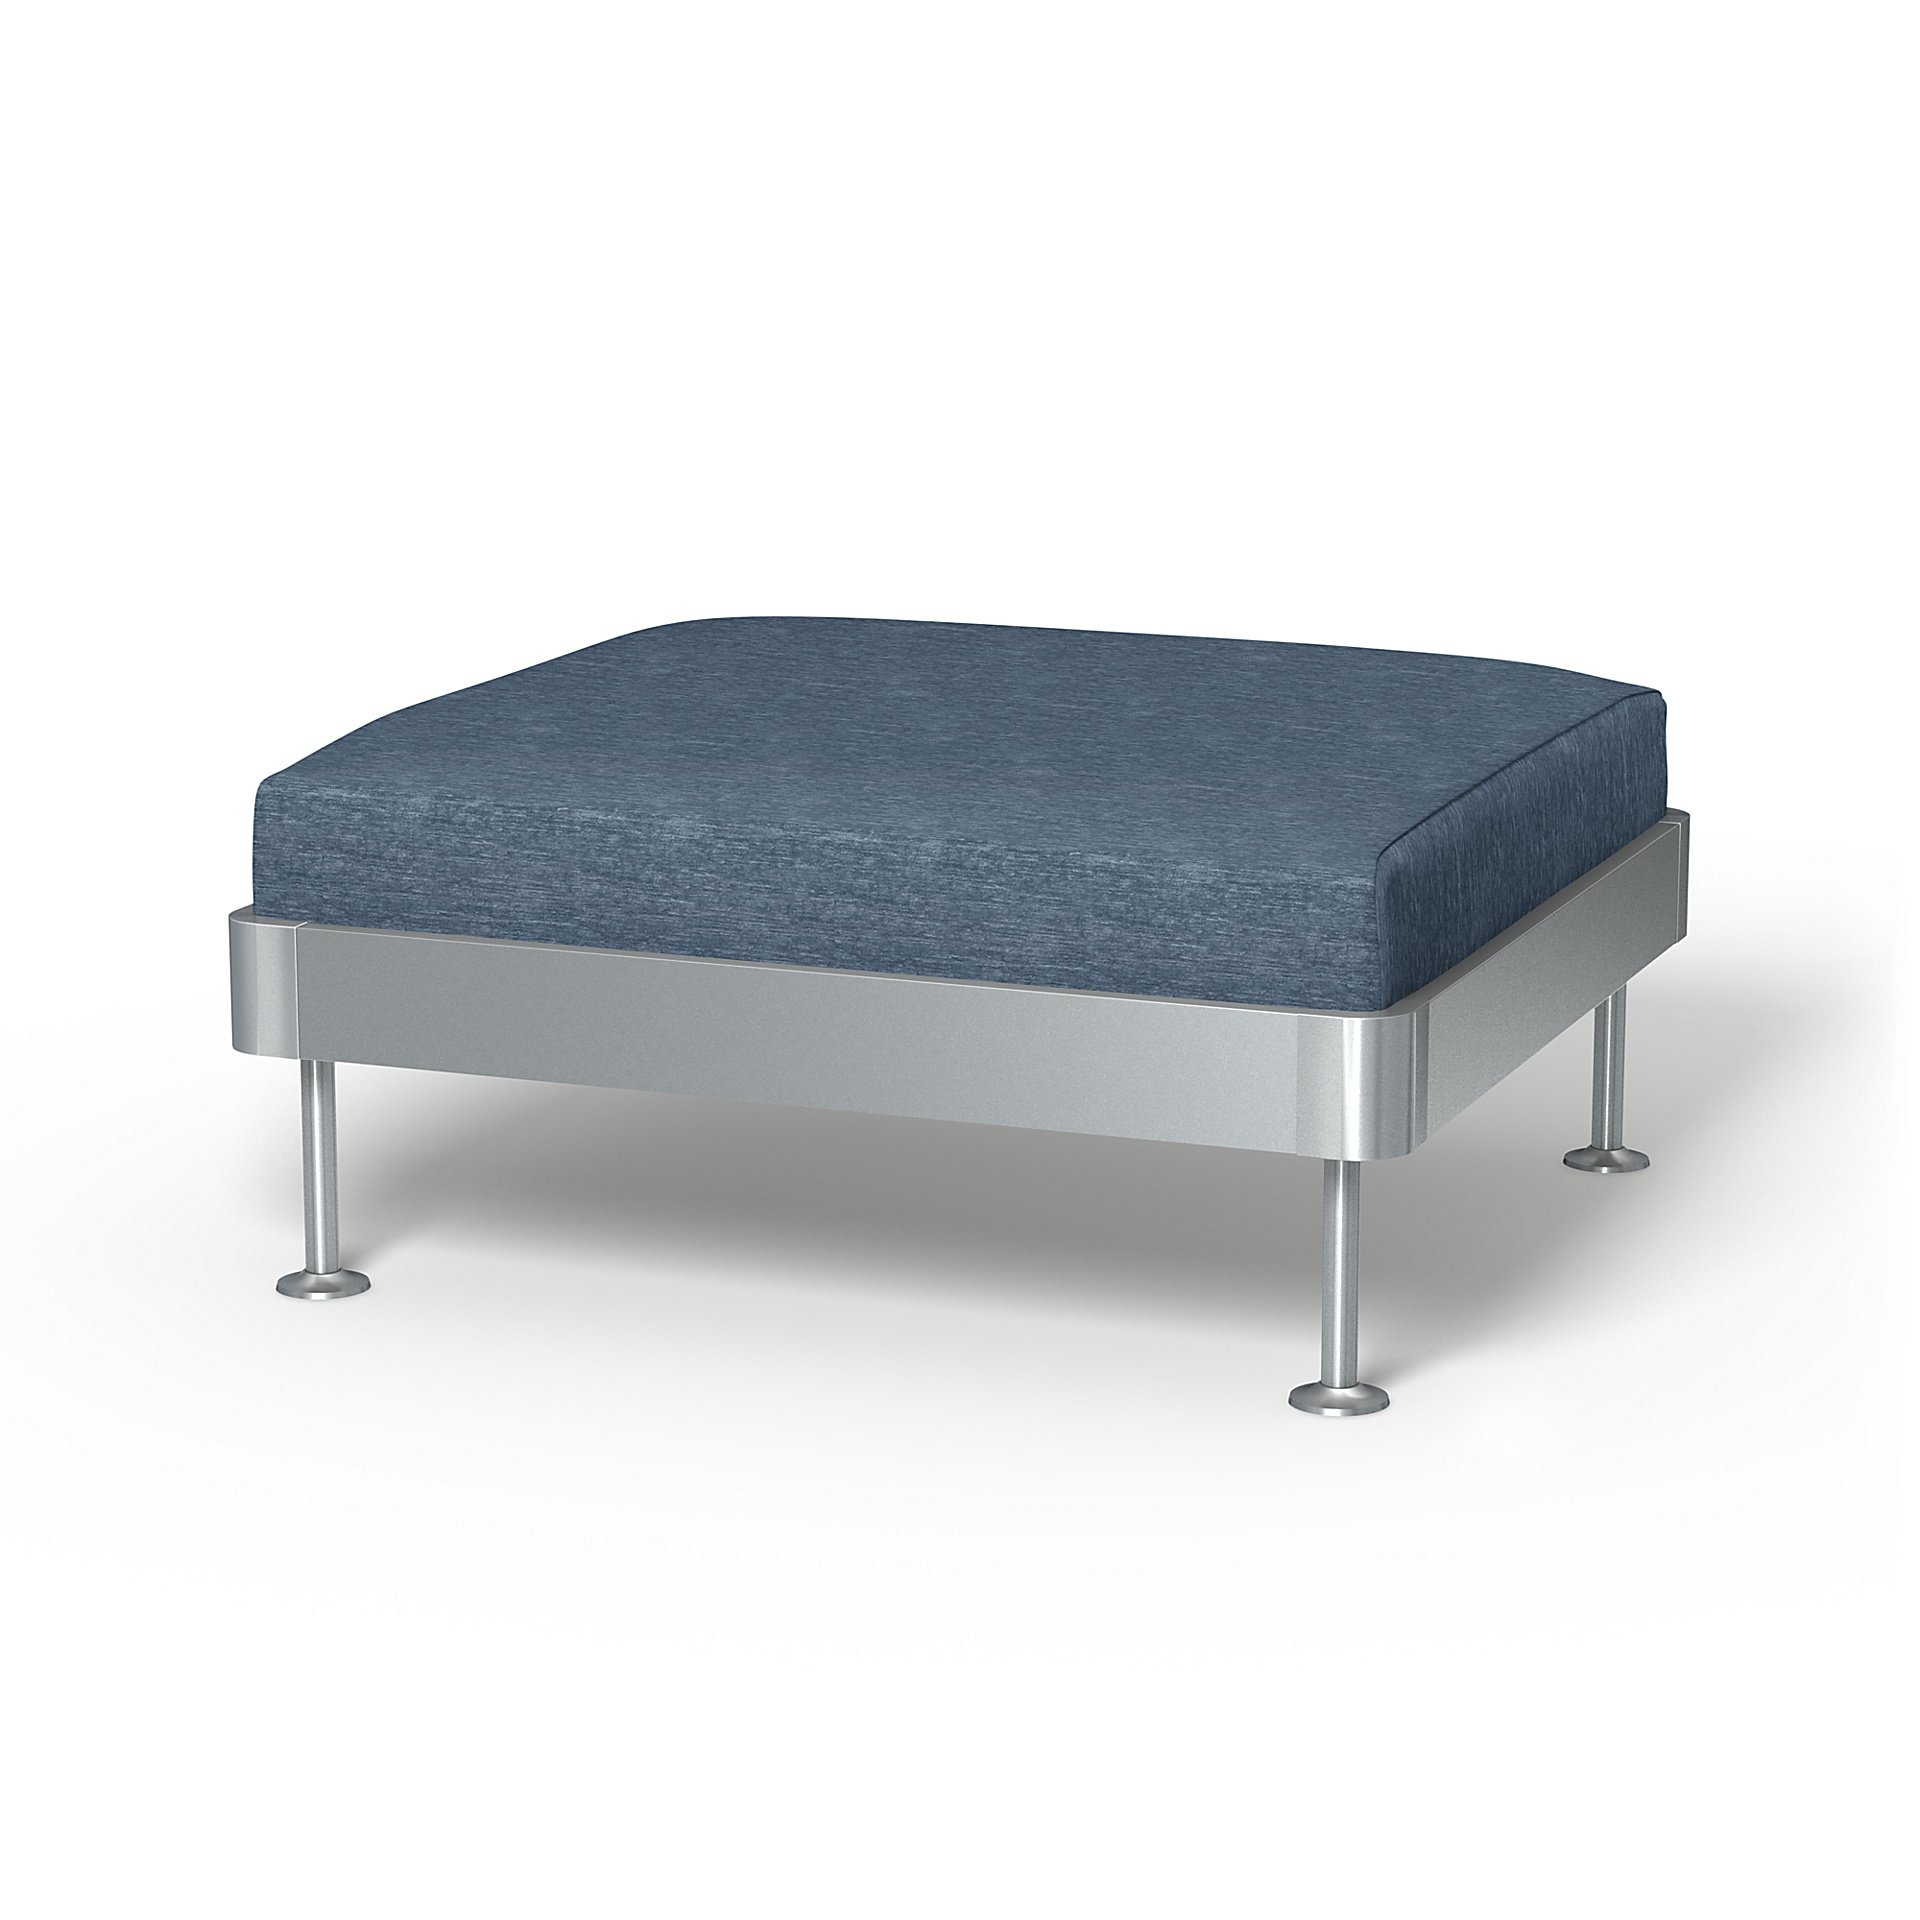 IKEA - Delaktig 1 Seat Platform Cover, Mineral Blue, Velvet - Bemz